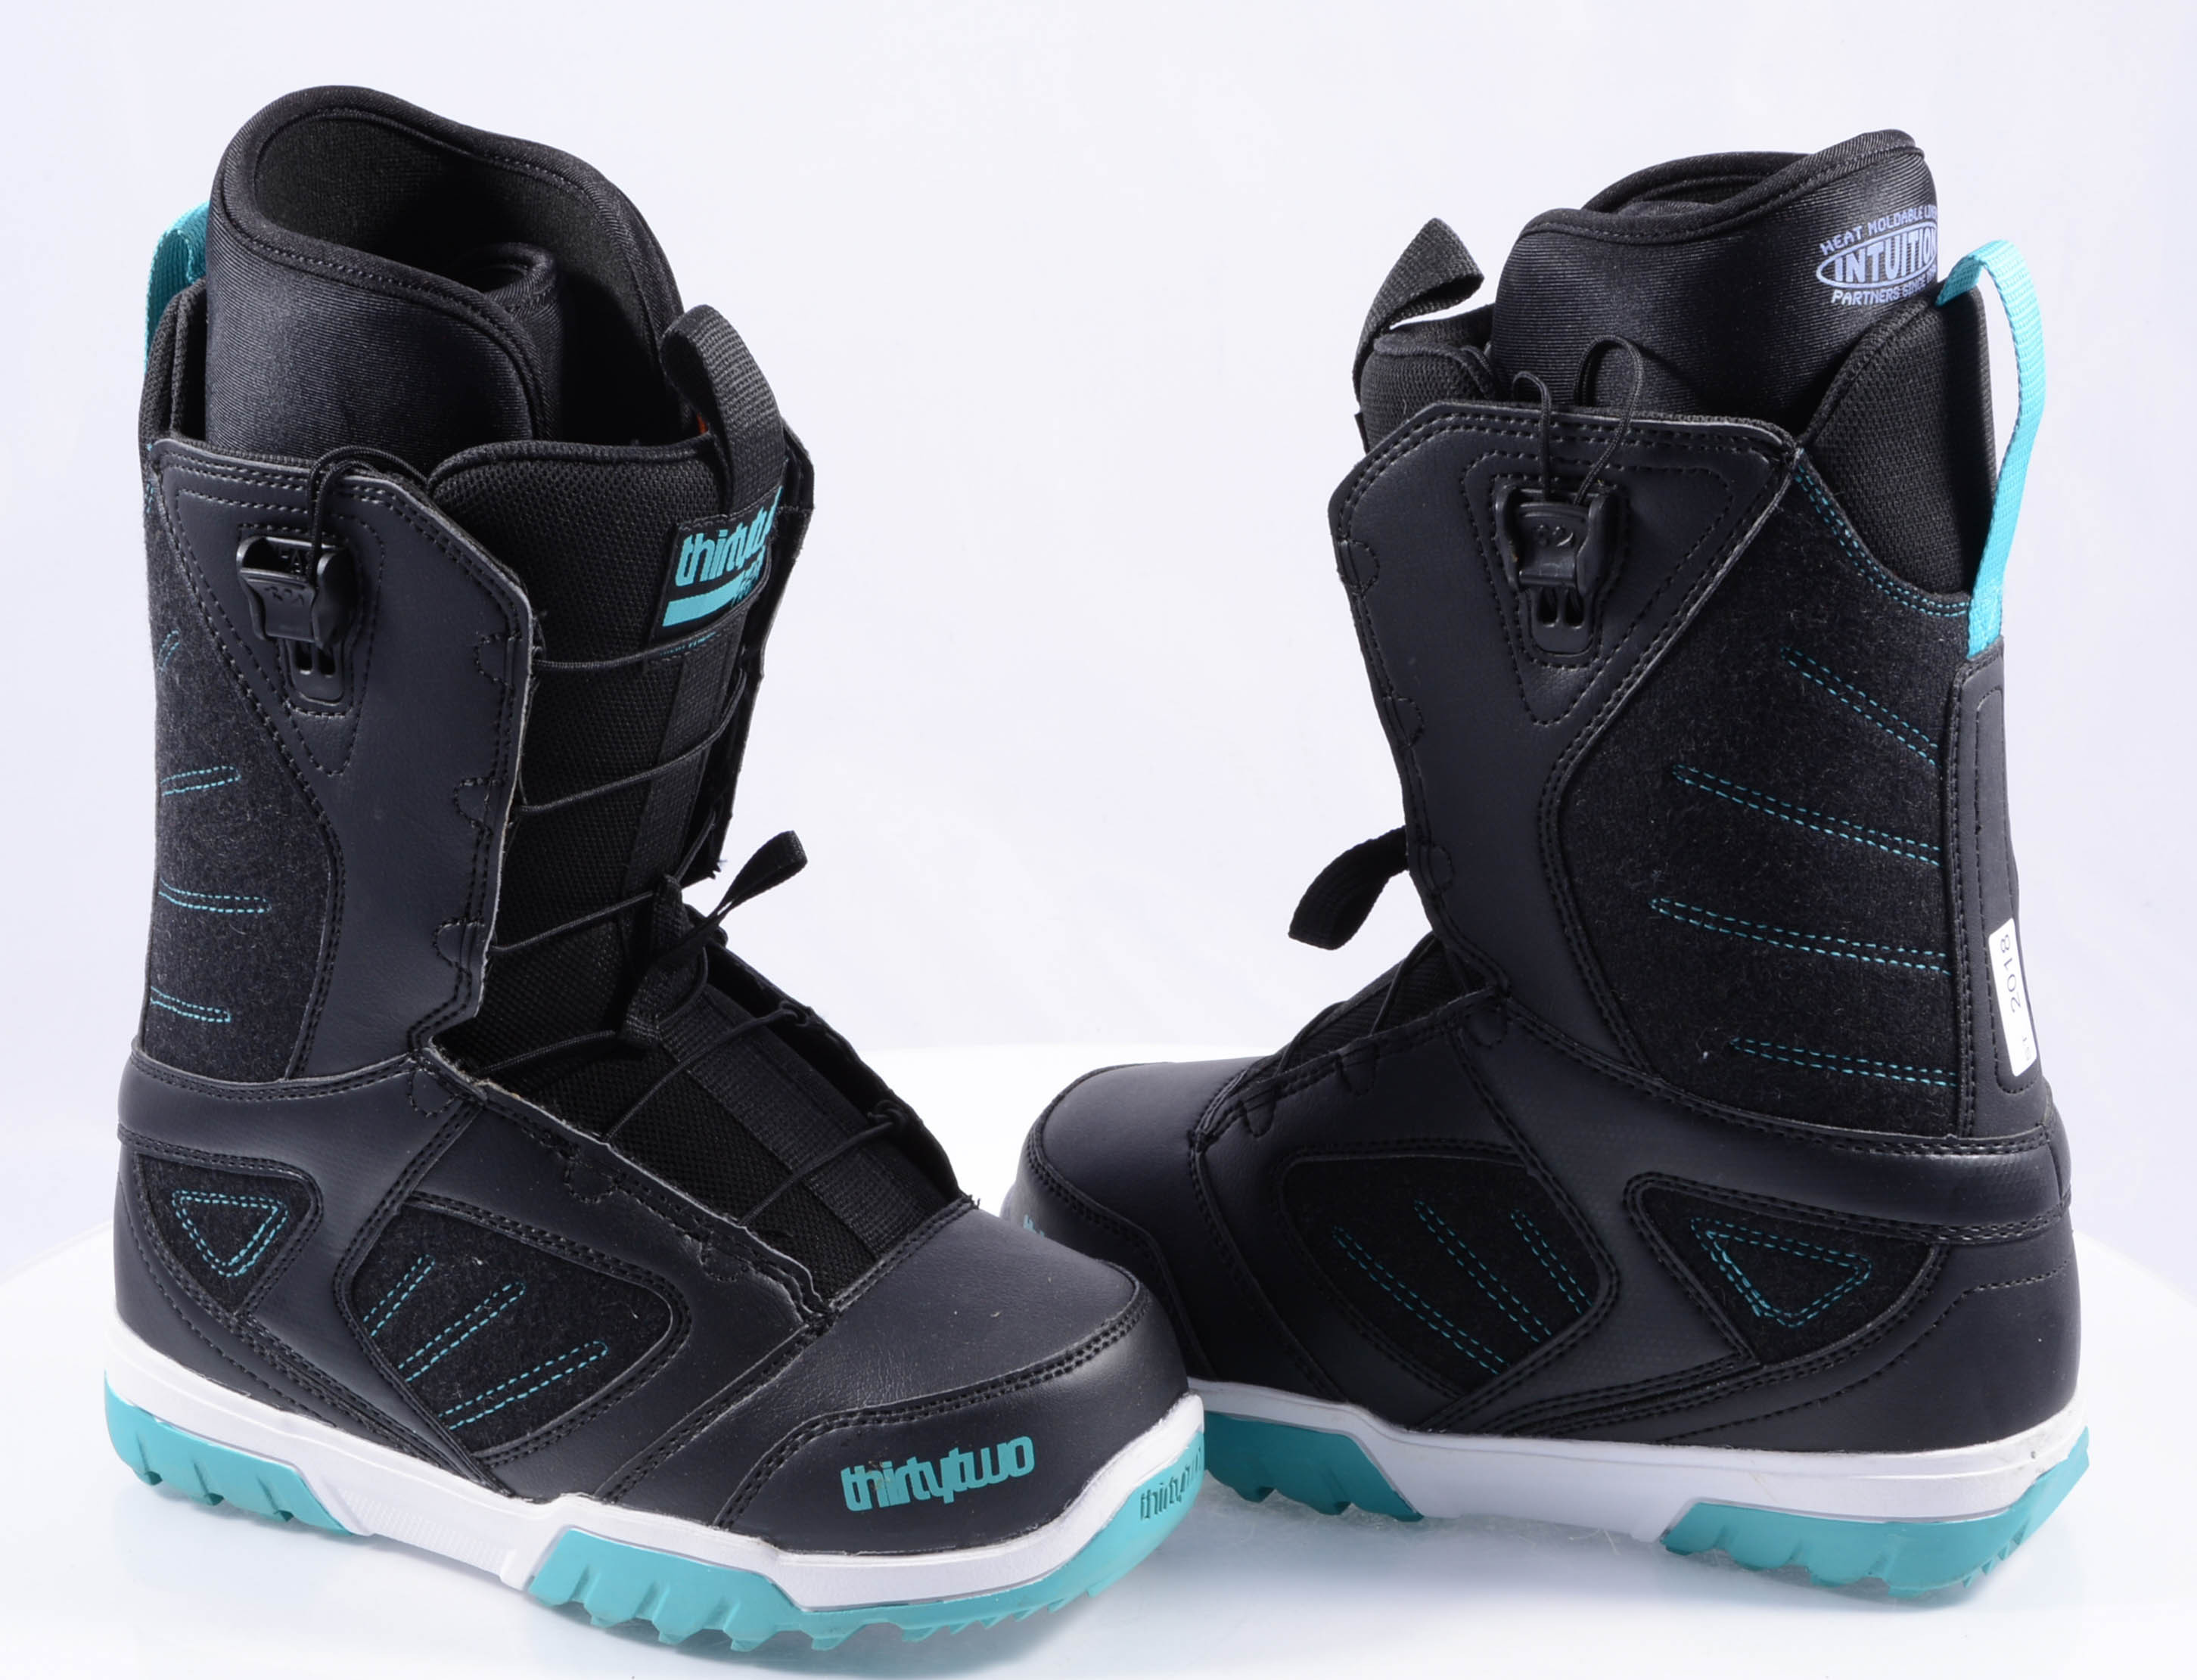 nieuwe snowboard schoenen THIRTYTWO FT FAST TRACK, heat liners, intuition, black/turquoise ( NIEUWE ) - Mardosport.be